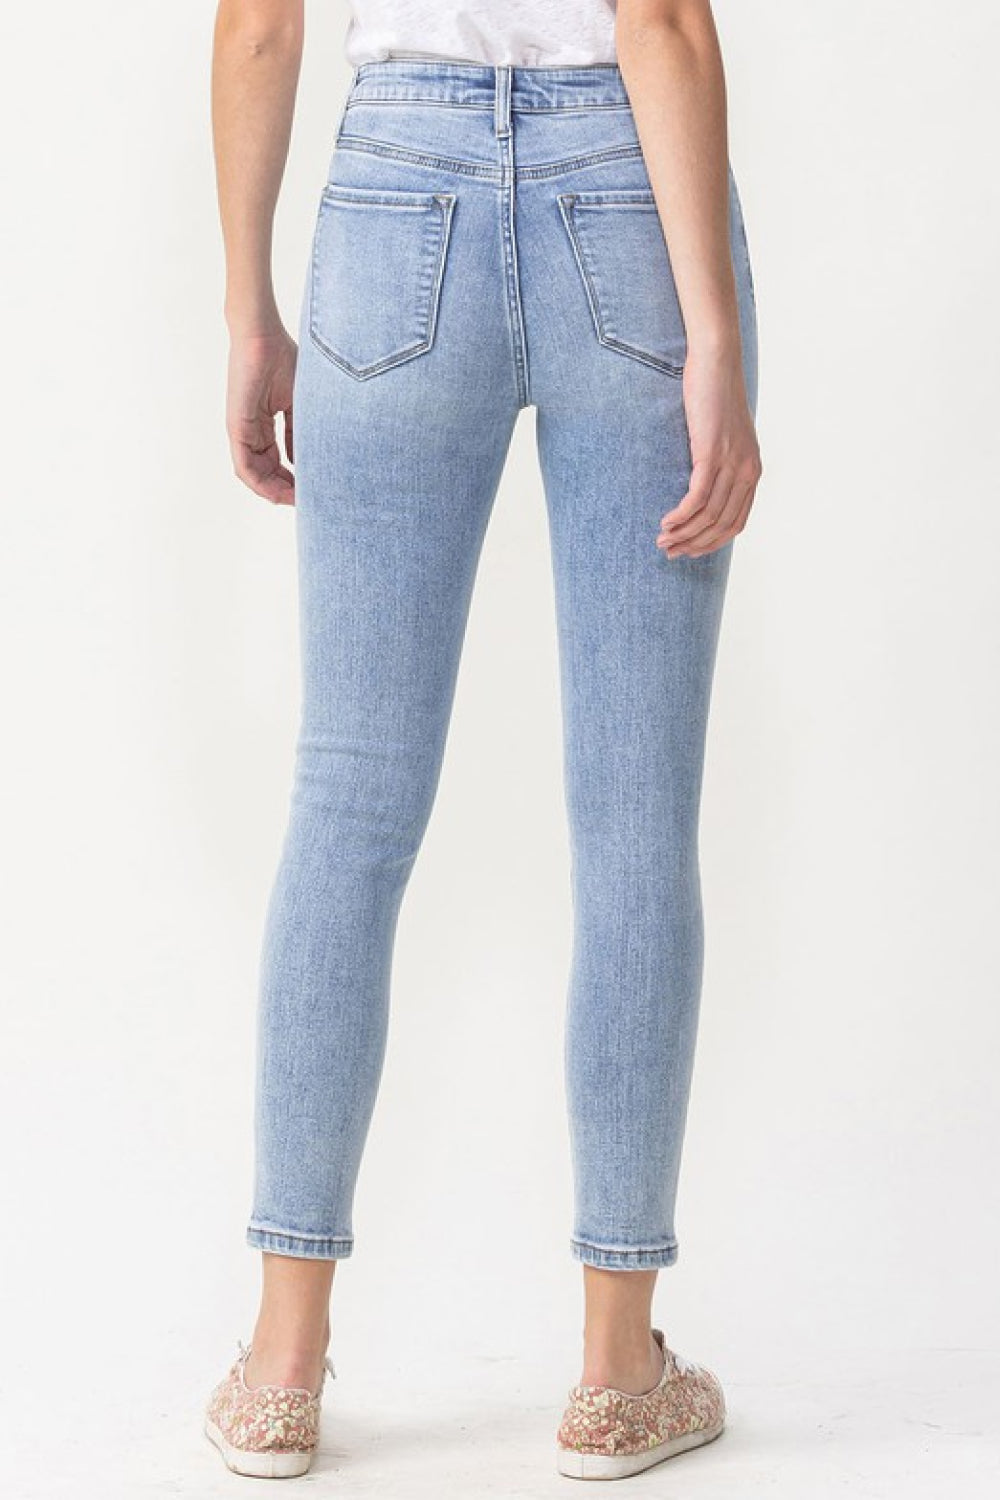 ❤GYPSY-Lovervet-Talia High Rise Crop Skinny Jeans